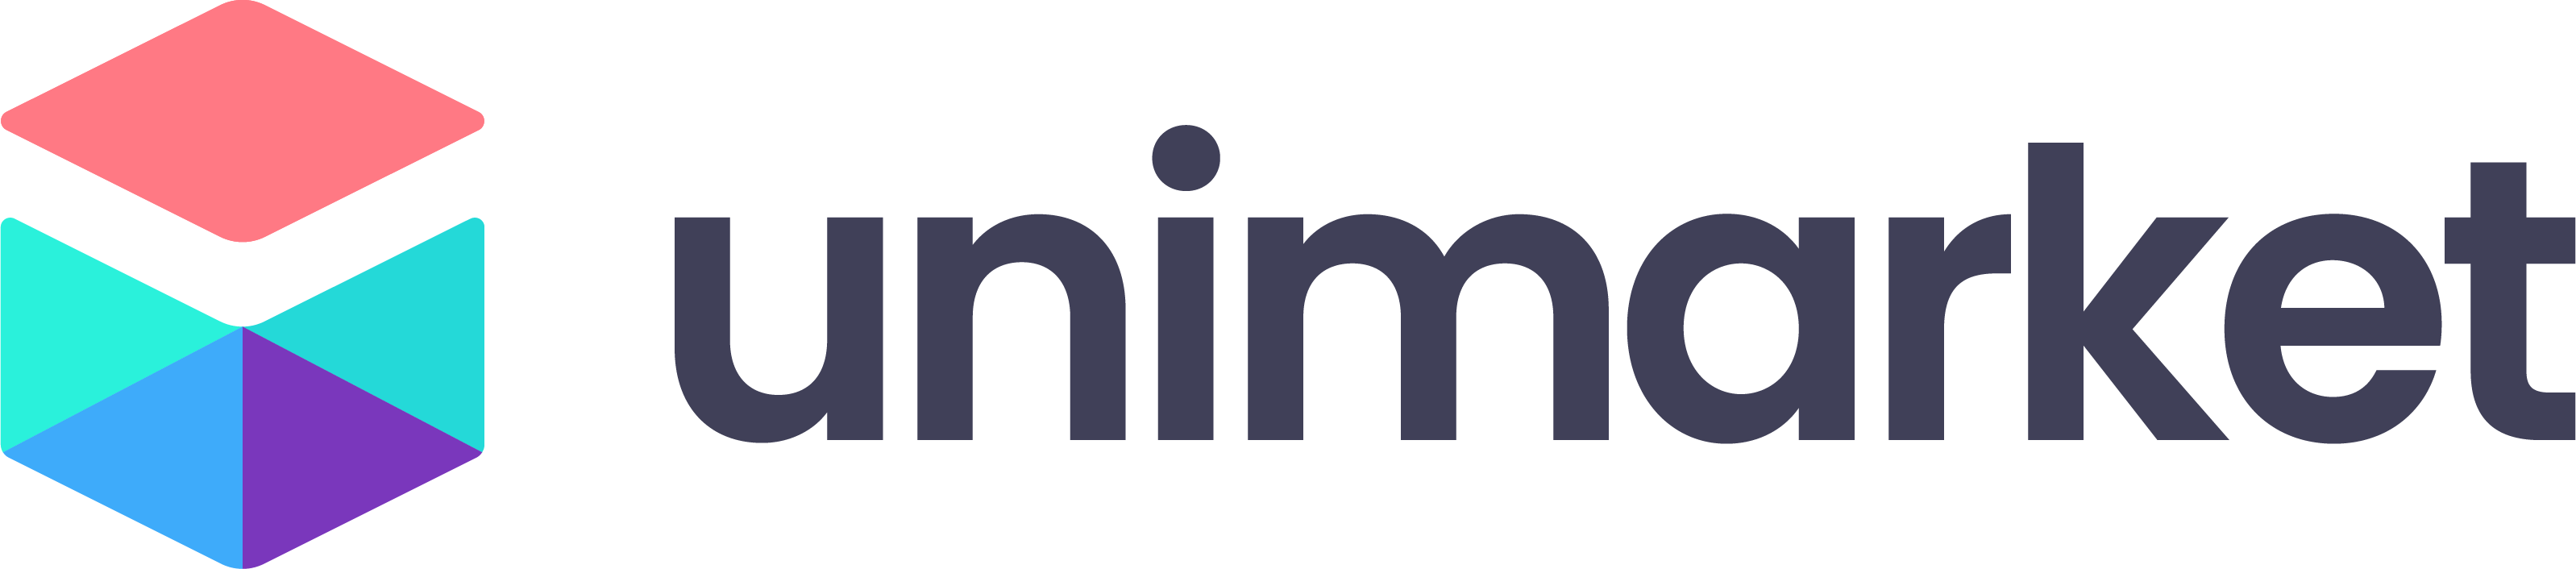 unimarket logo